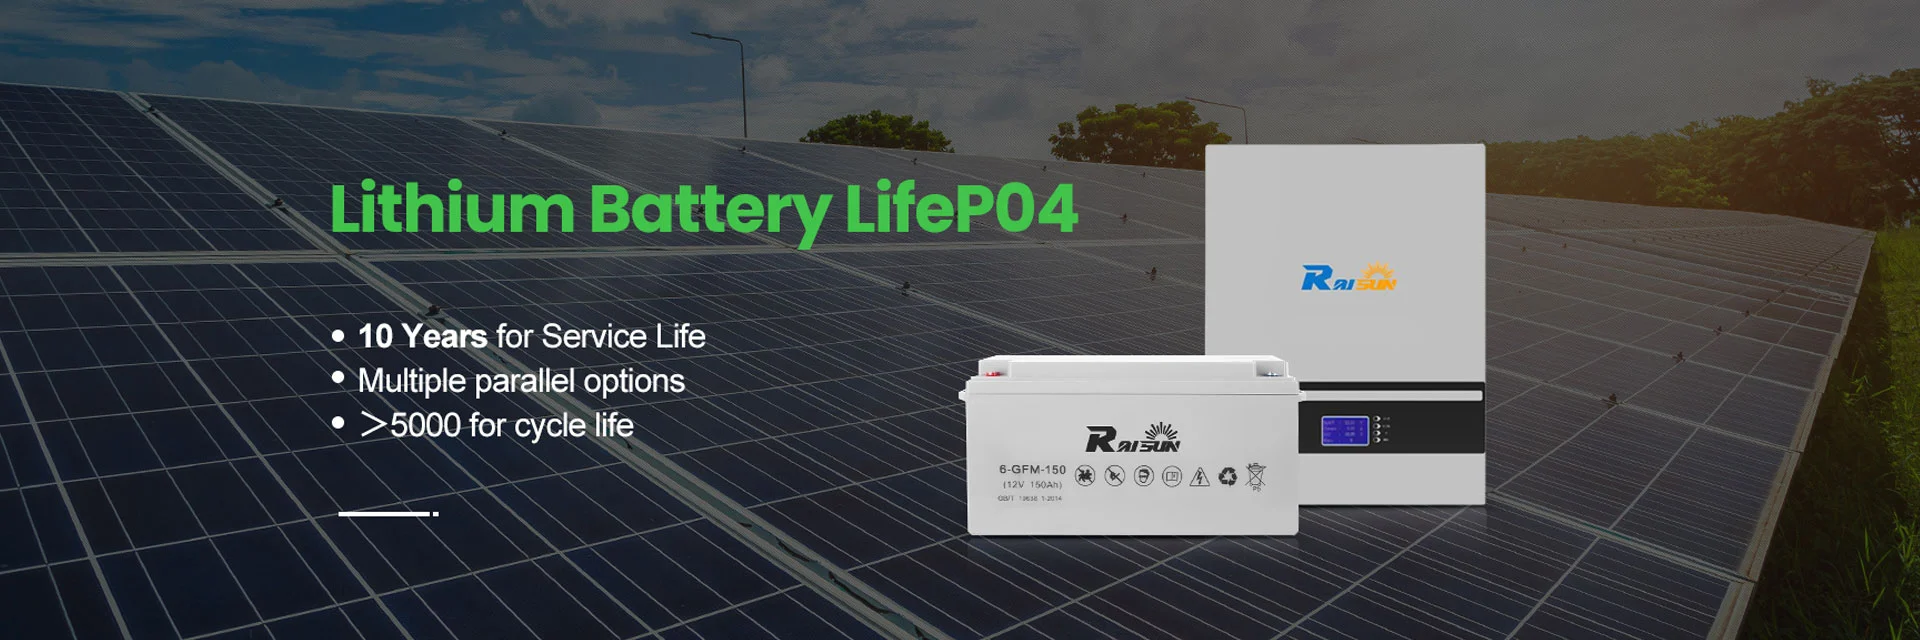 Lithium Battery LiFePO4